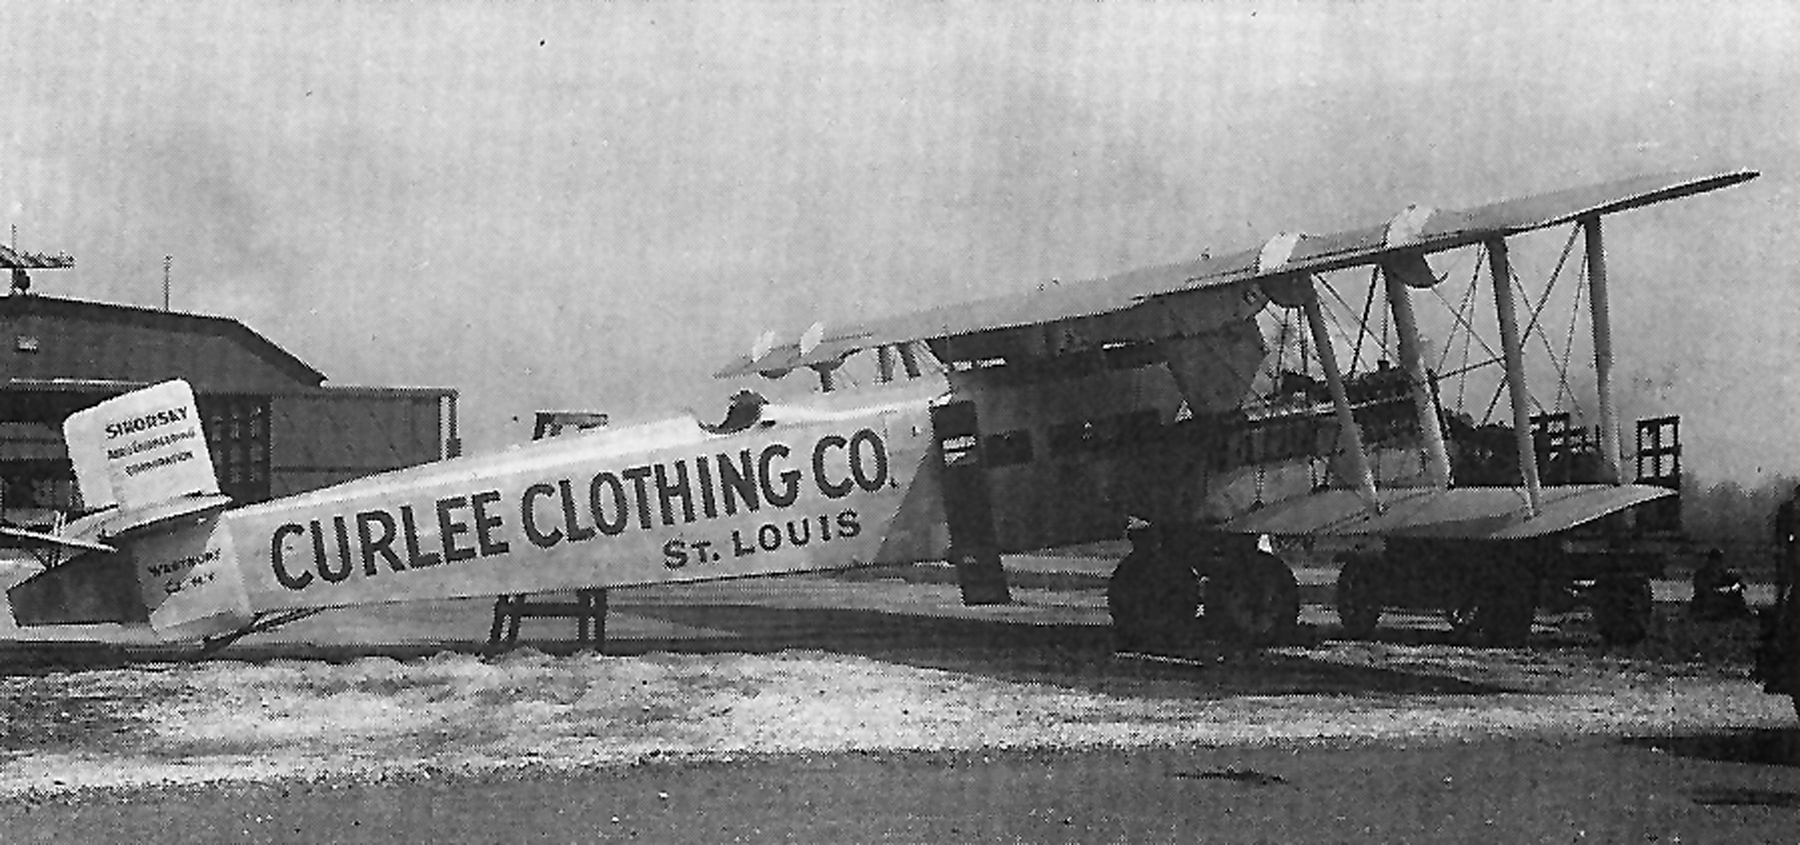 Air Racing Great Pilot Roscue Turner 4" x 6" Photographs Set #146 Lot of 2